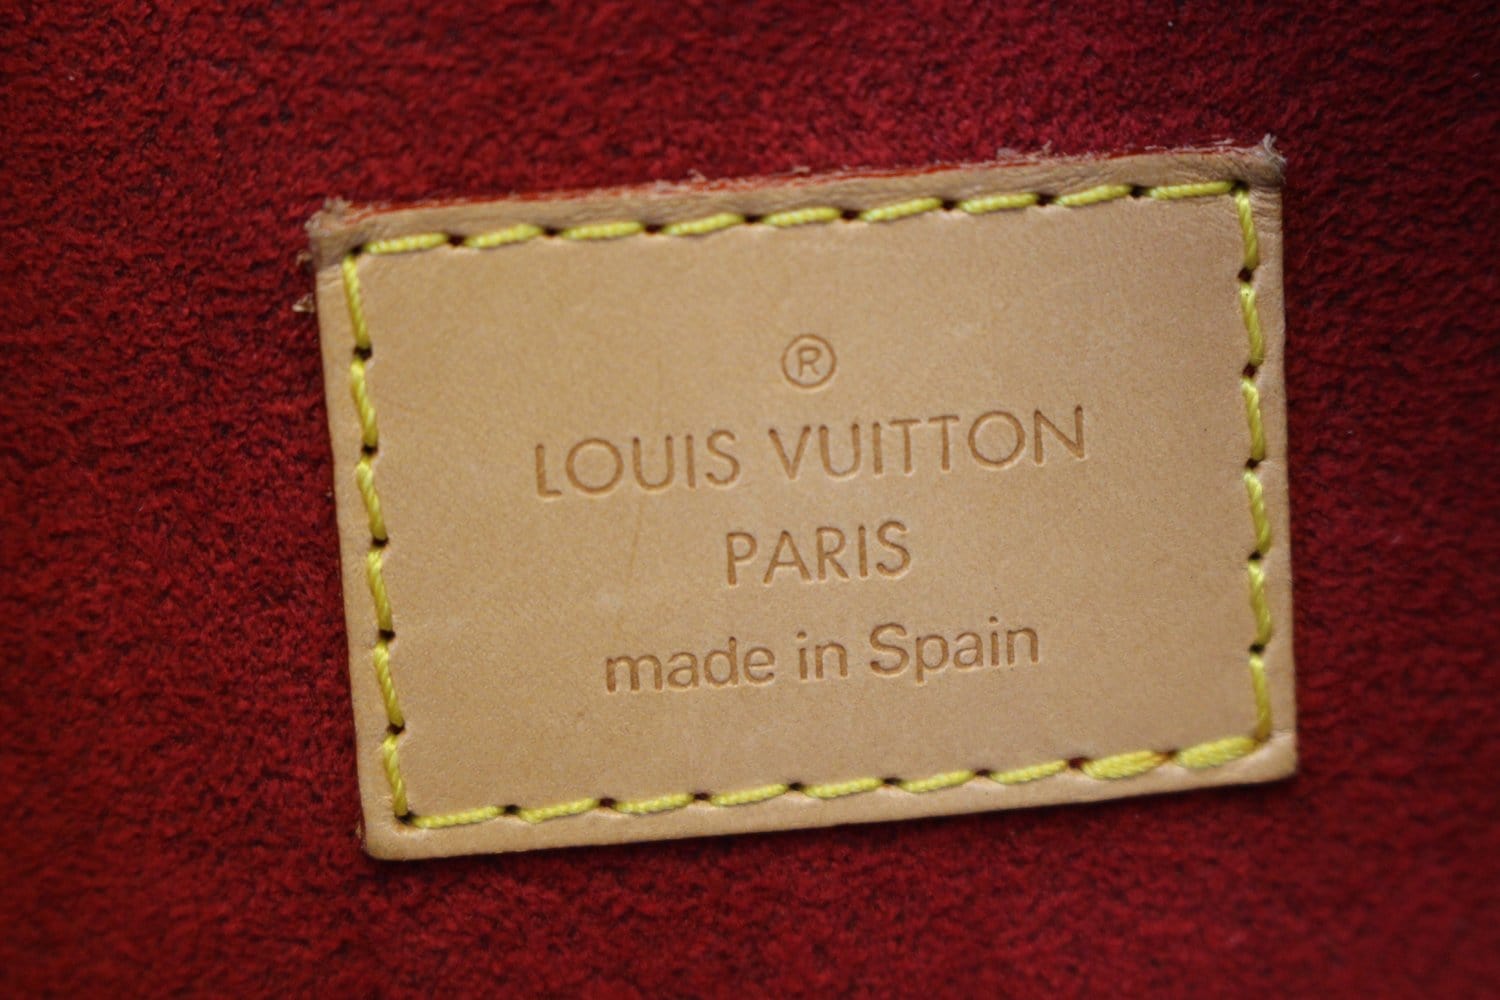 Louis Vuitton excursion bag – Lady Clara's Collection